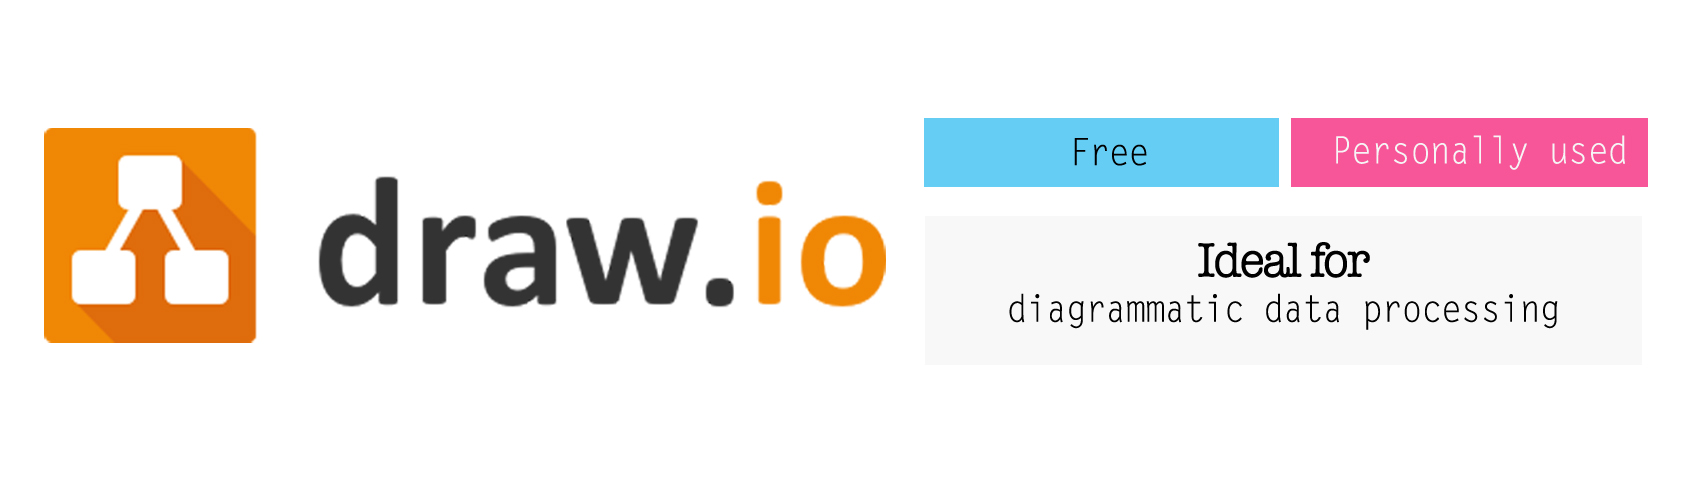 draw.io for diagrammatic data processing